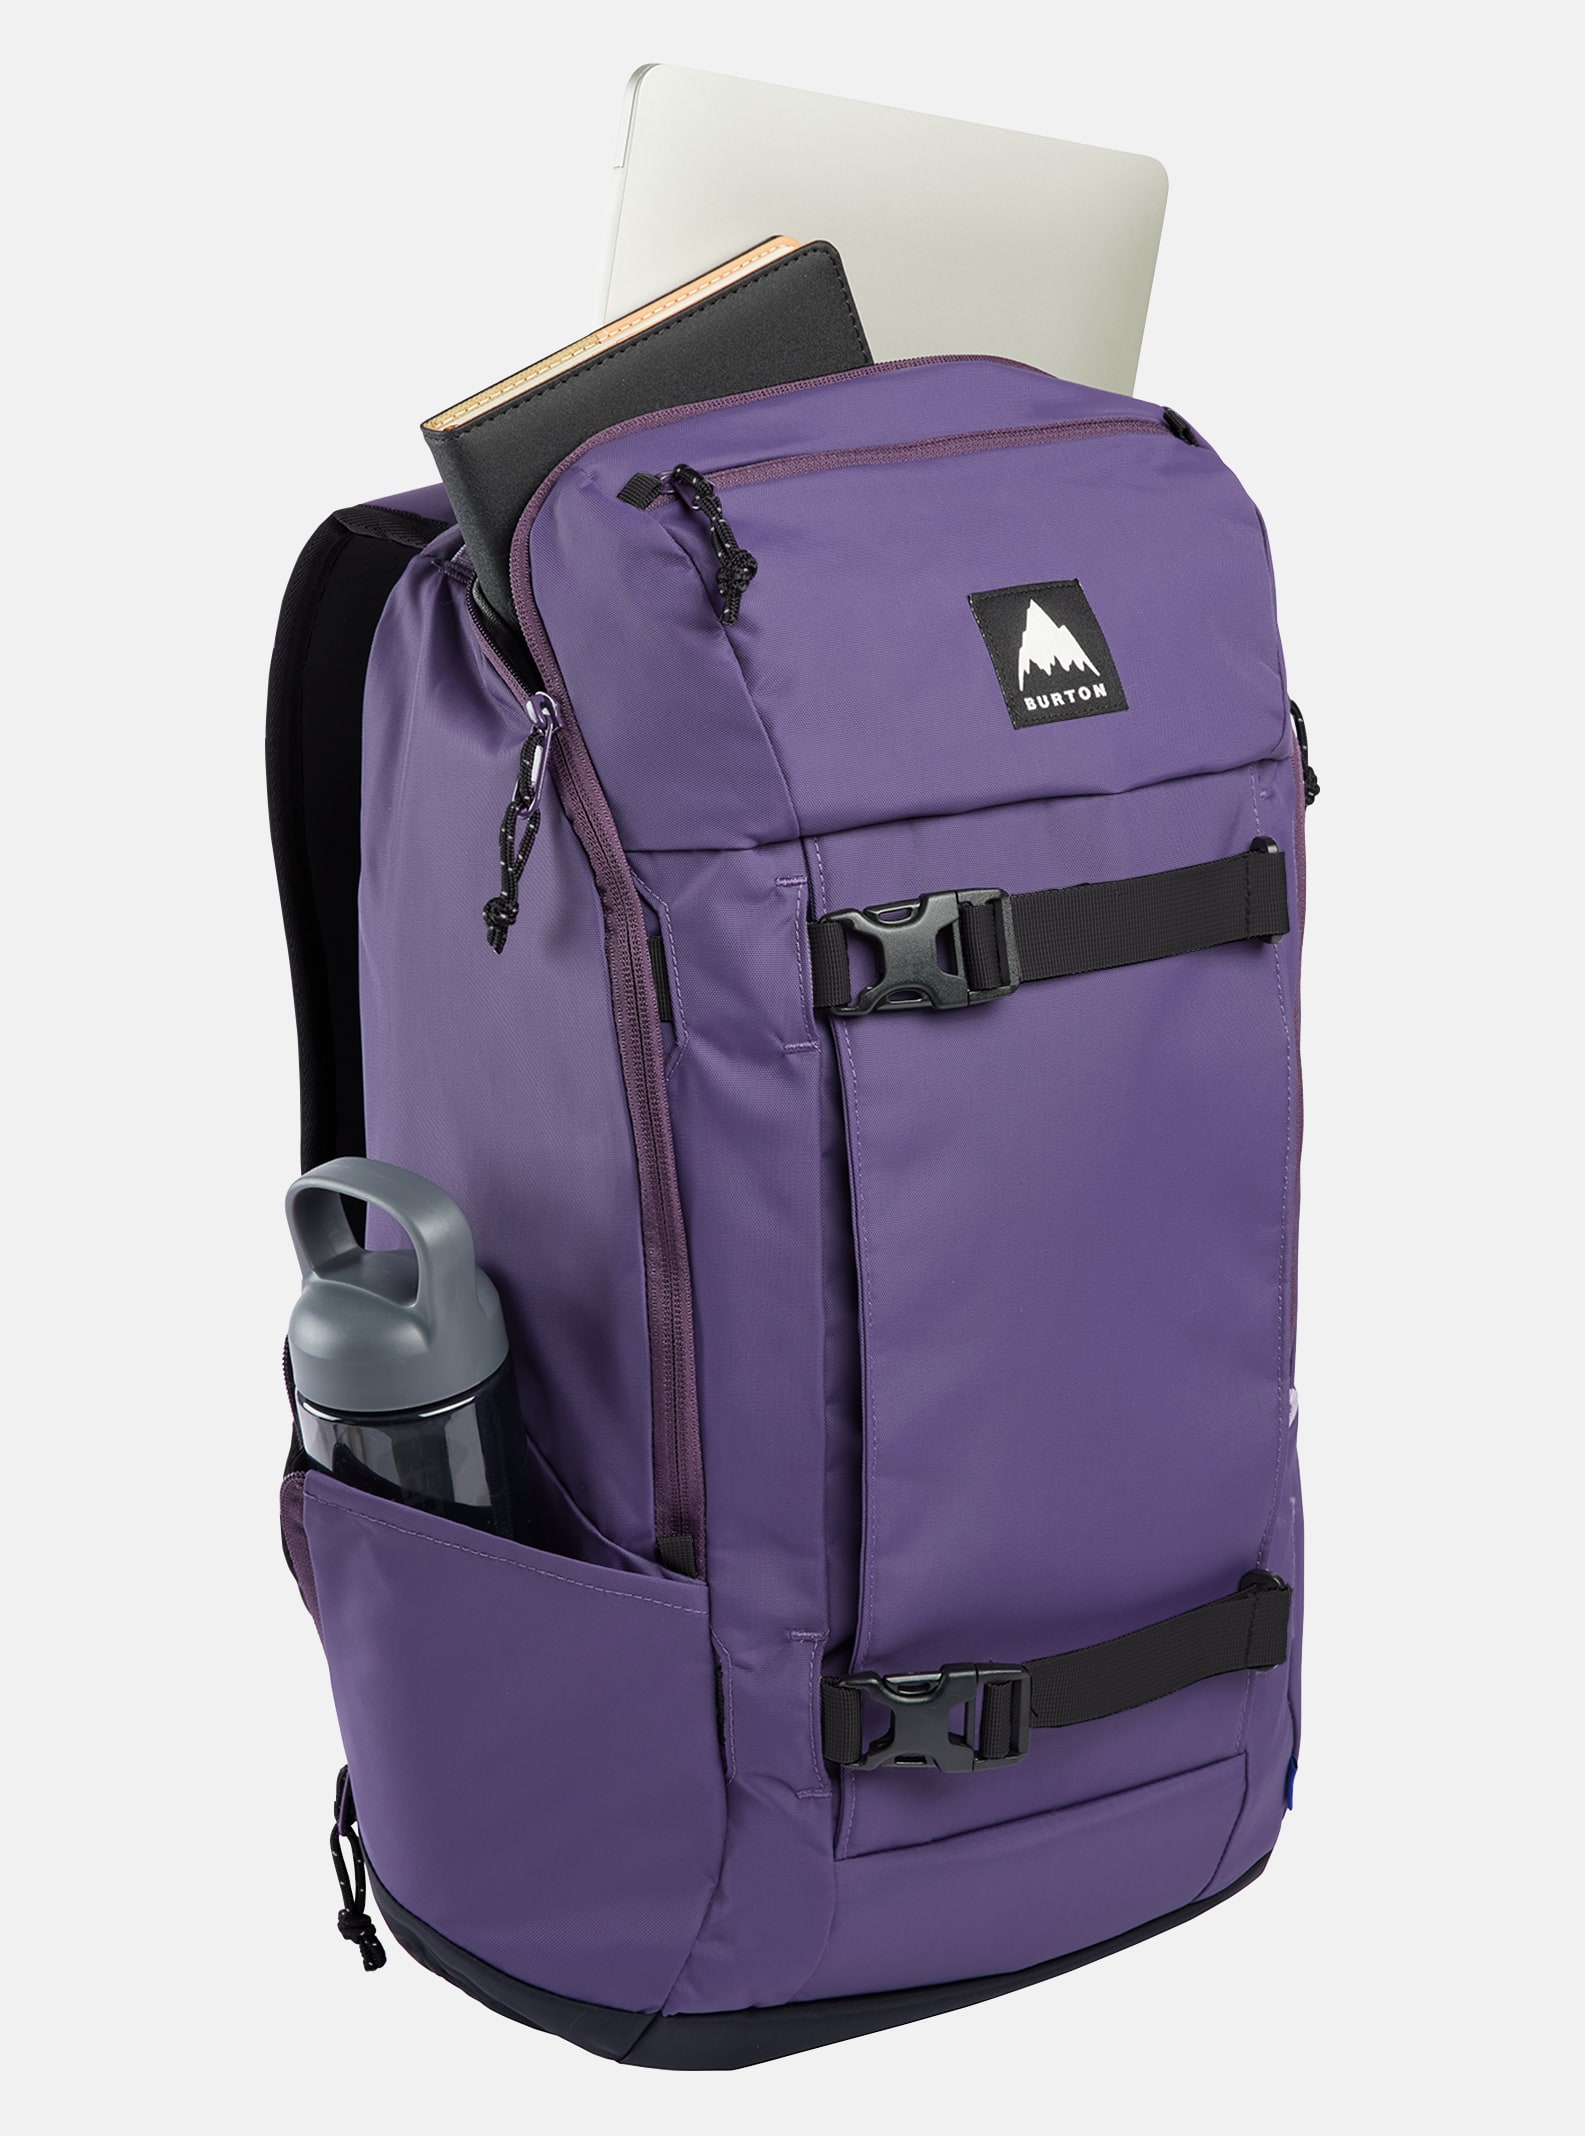 Backpacks | Burton Snowboards US